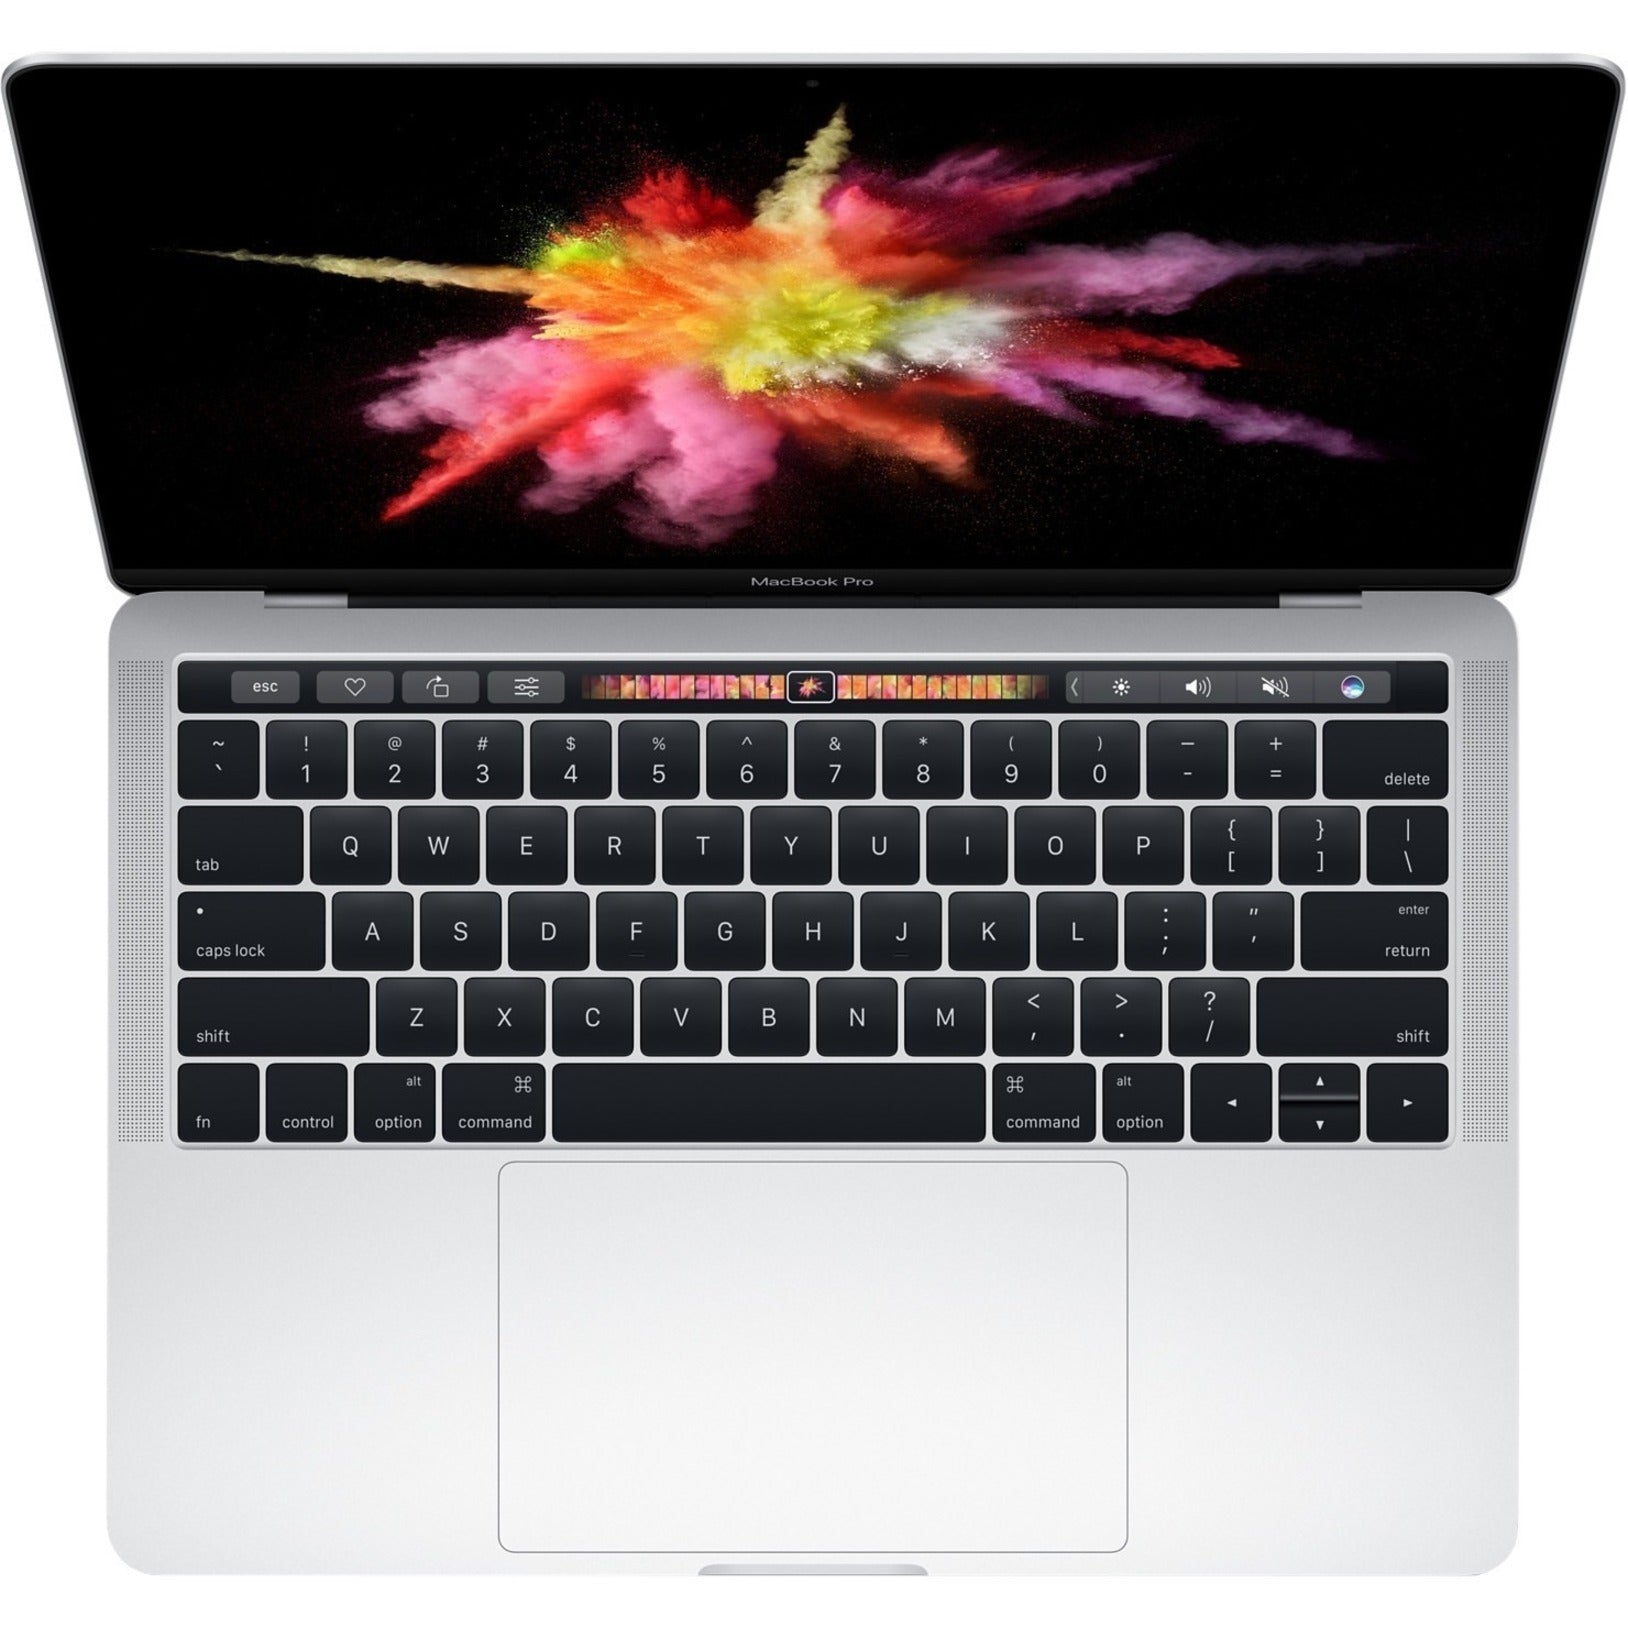 Apple MR962LL/A MacBook Pro 15-inch Silver, 2.2GHz Core i7, 16GB RAM, 256GB SSD